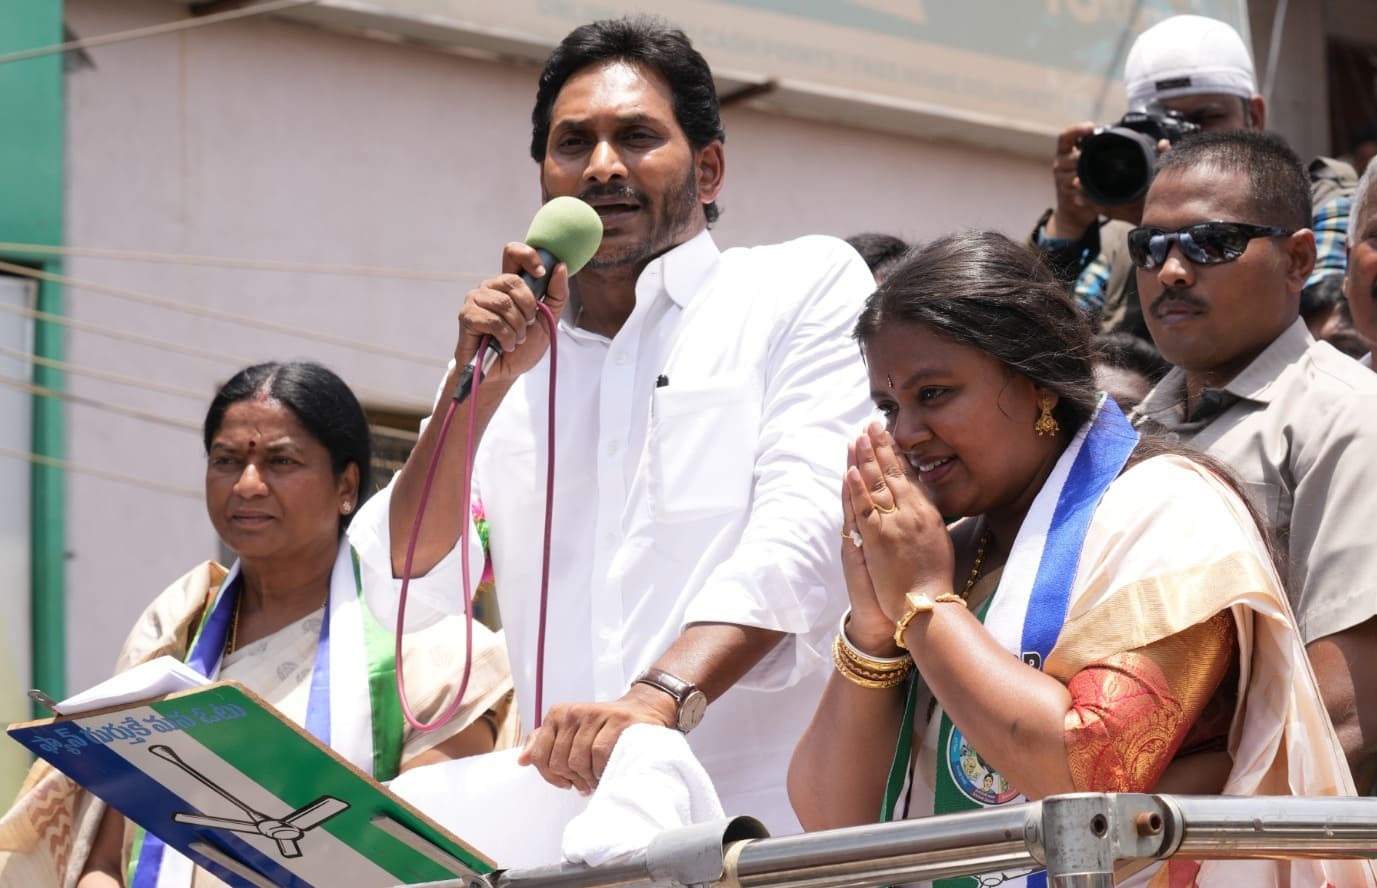 YS Jagan Mohan Reddy addressing an election rally. (X)